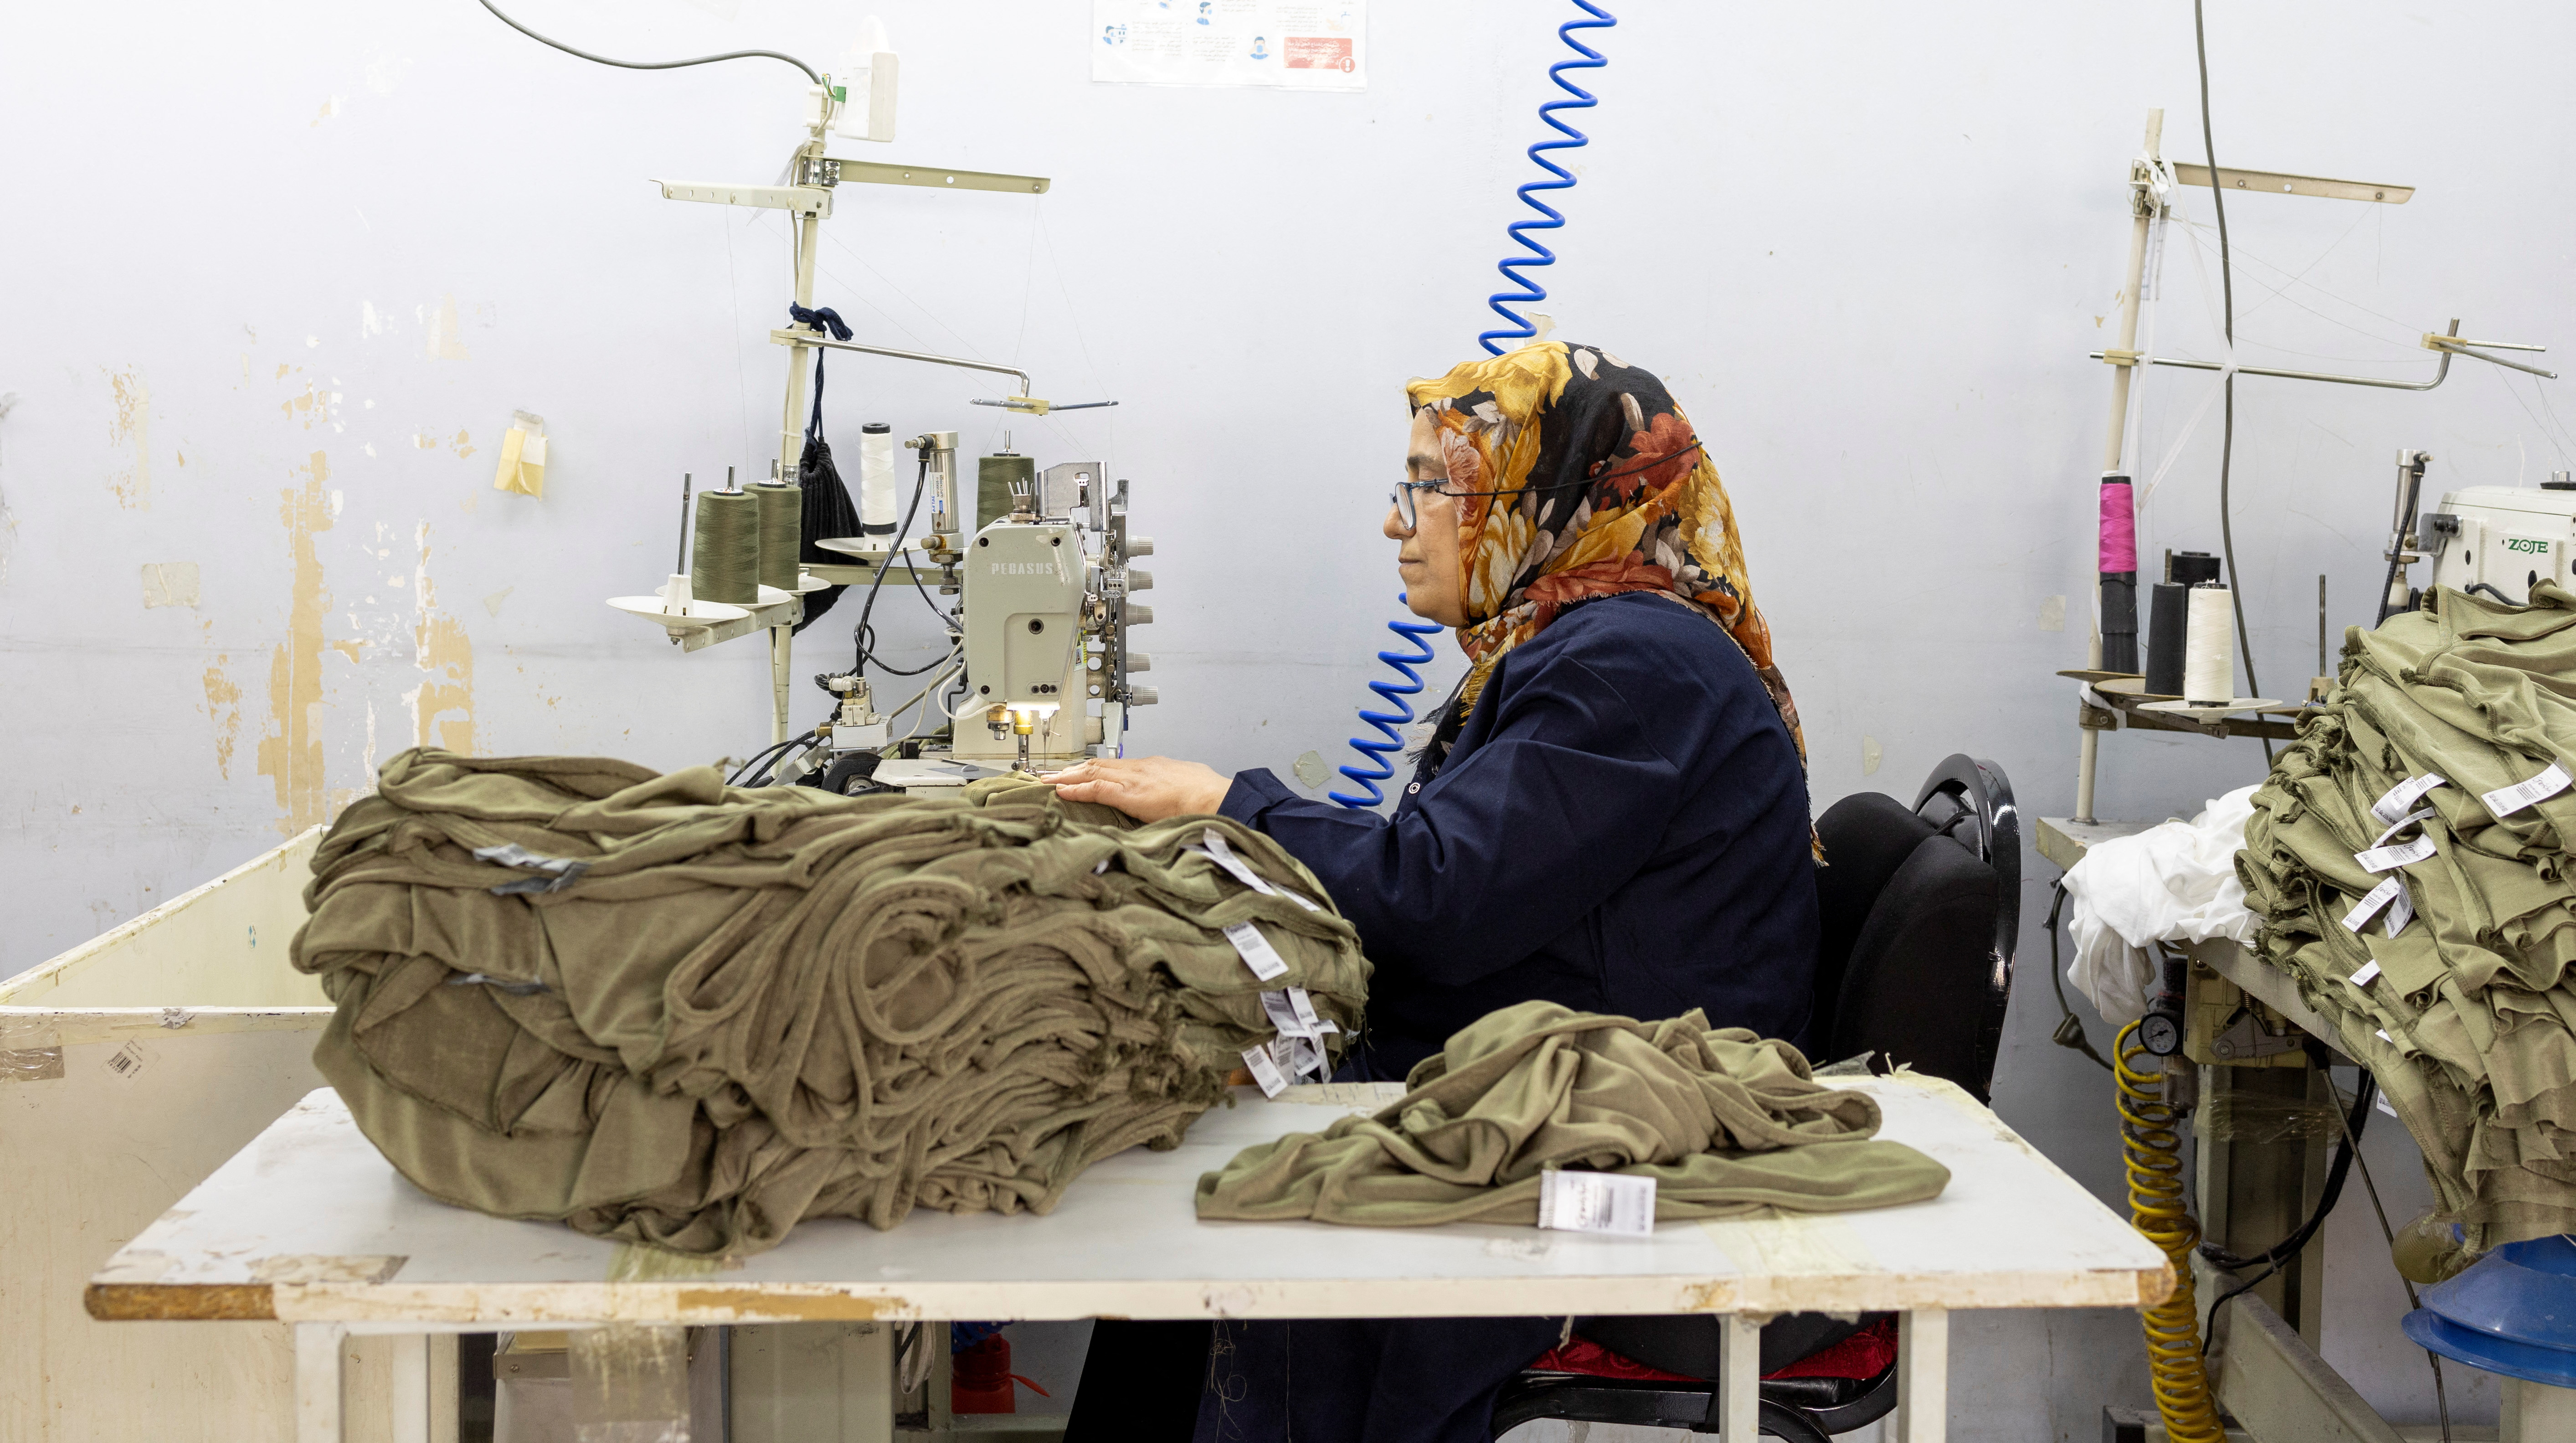 Apparel Clothing Manufacturer Turkey, Seza Textile